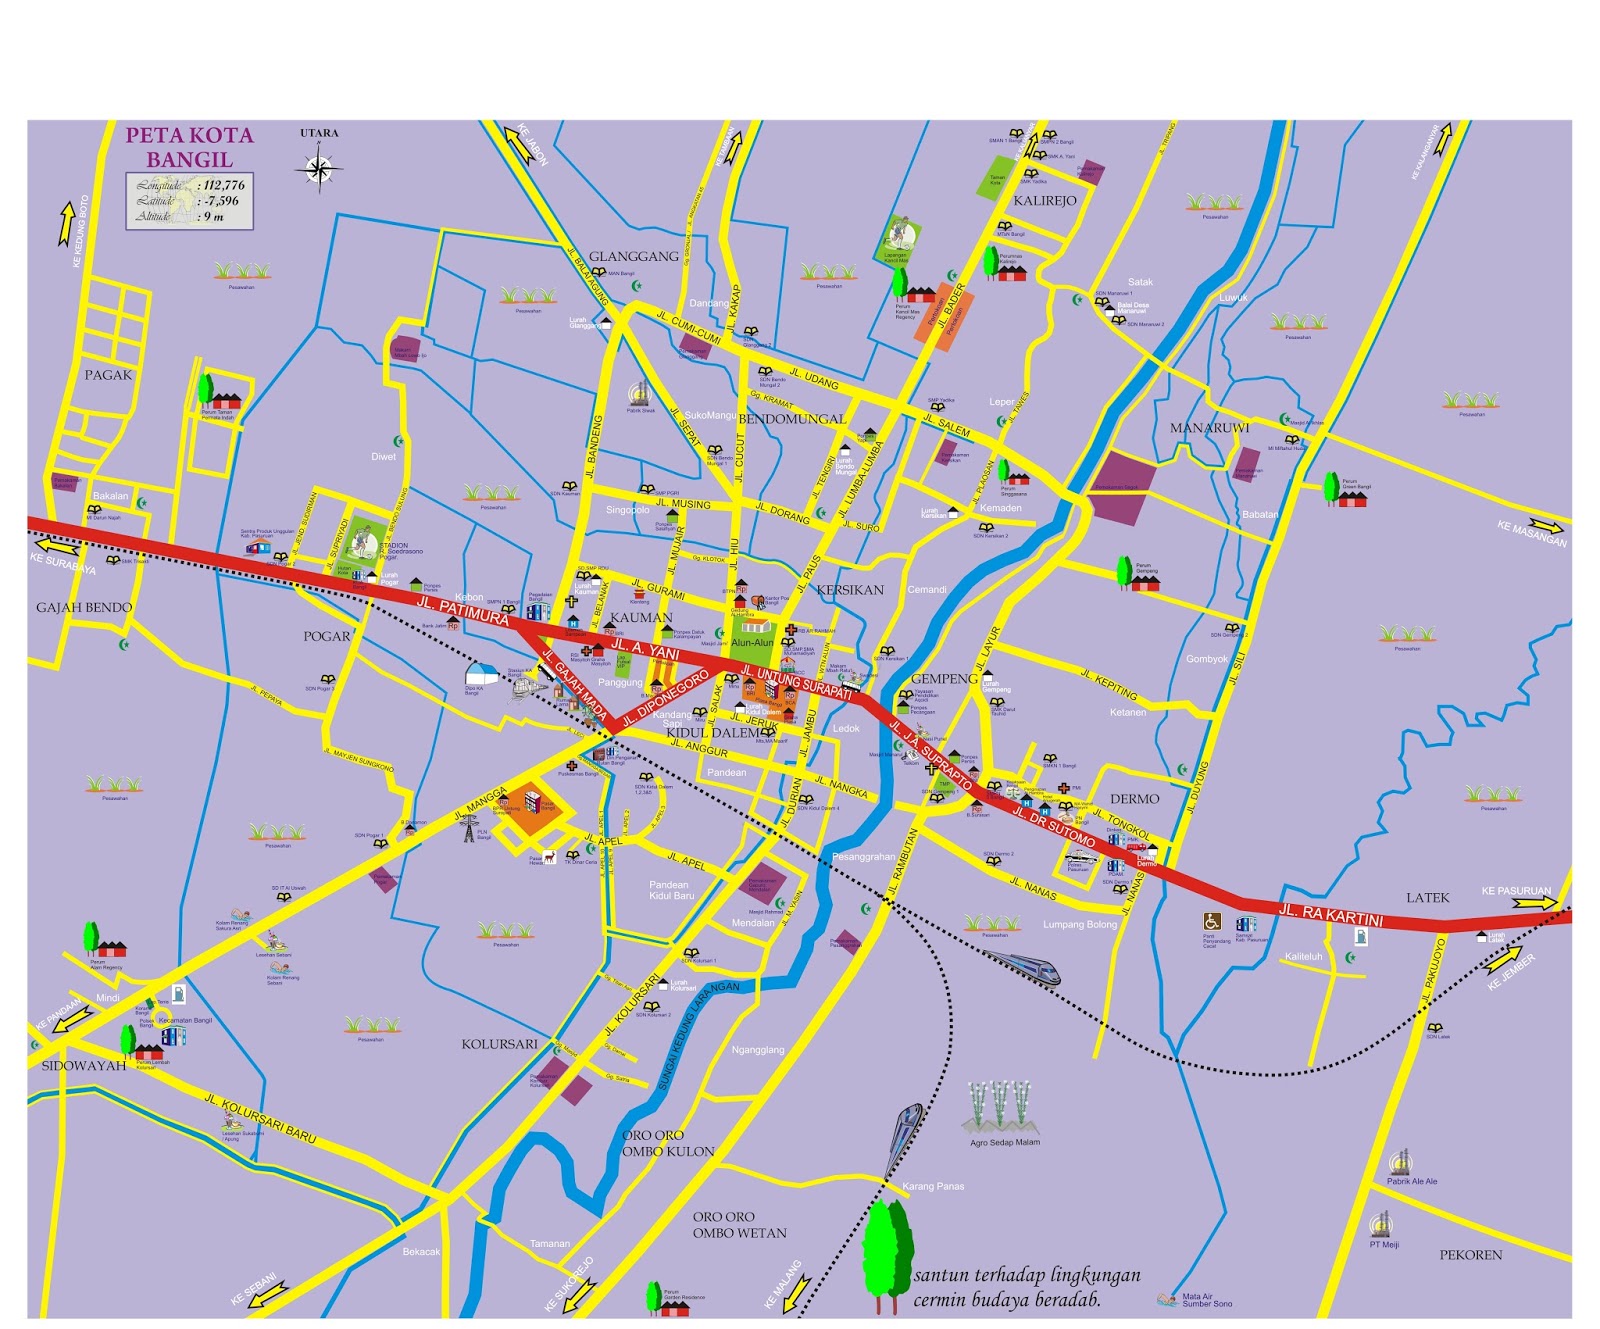 > Peta Lengkap Indonesia: Peta Kota Bangil